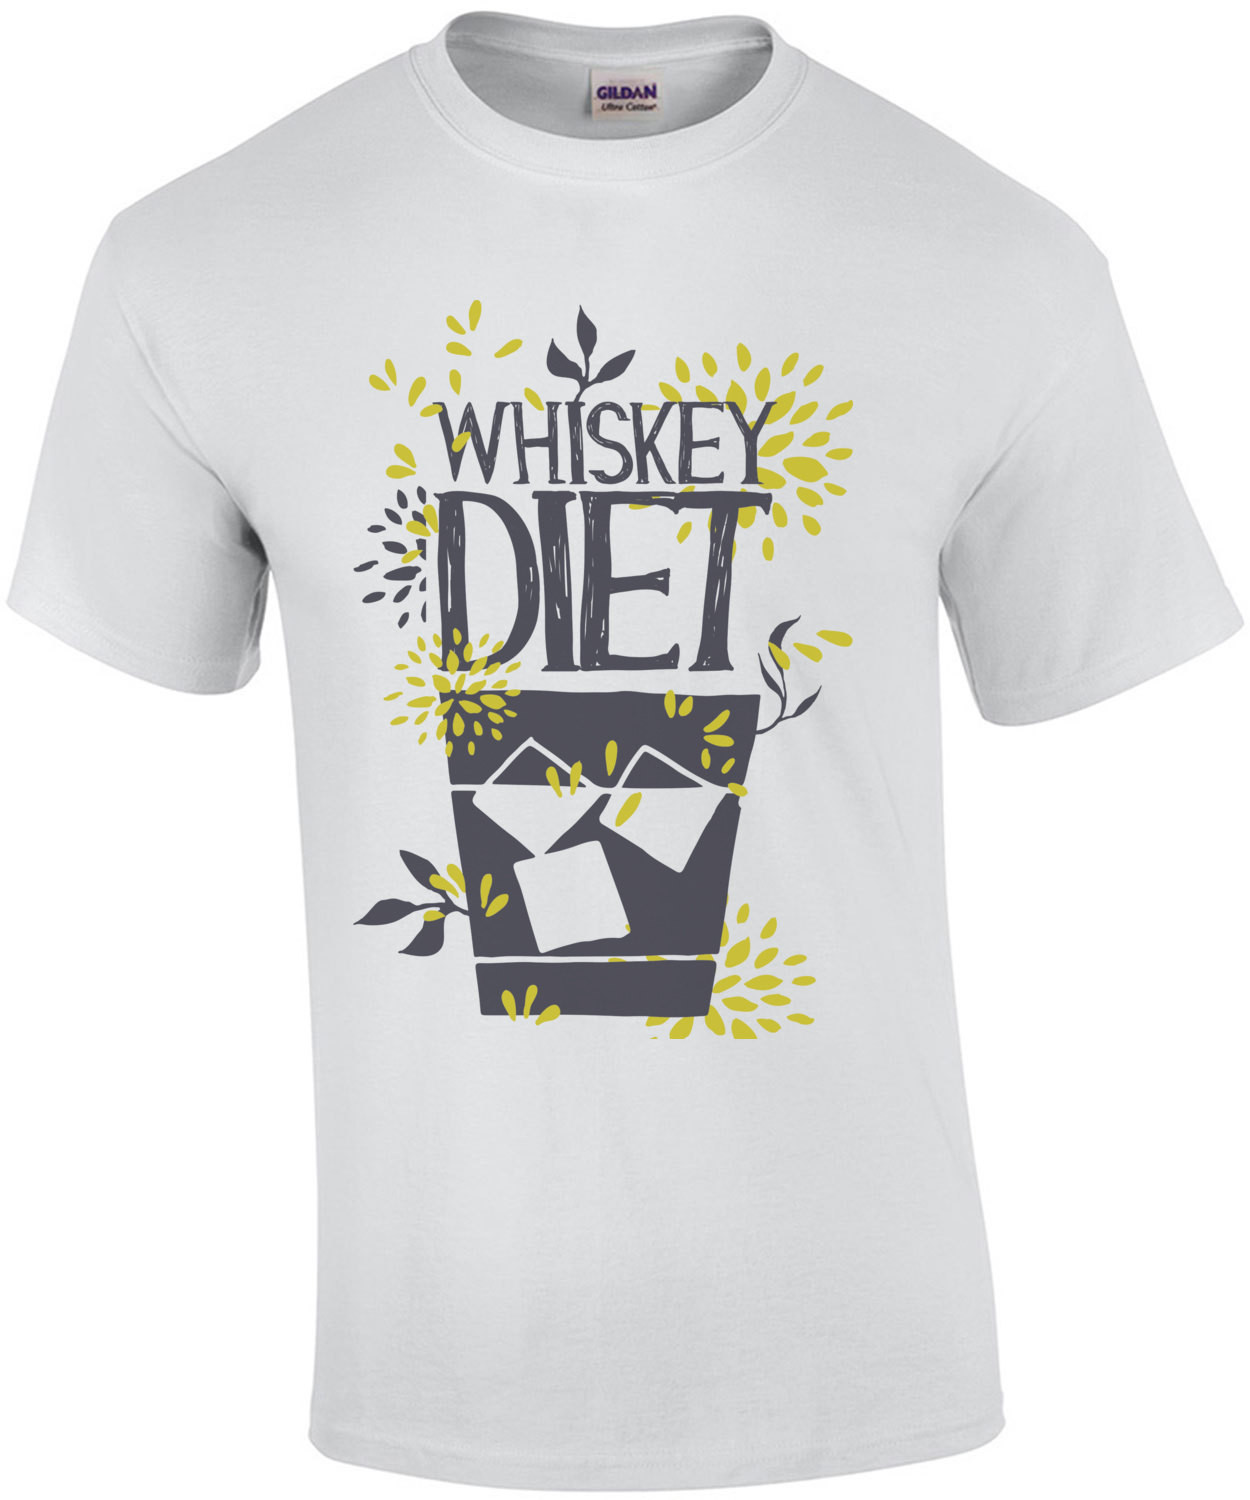 Whiskey Diet T-Shirt